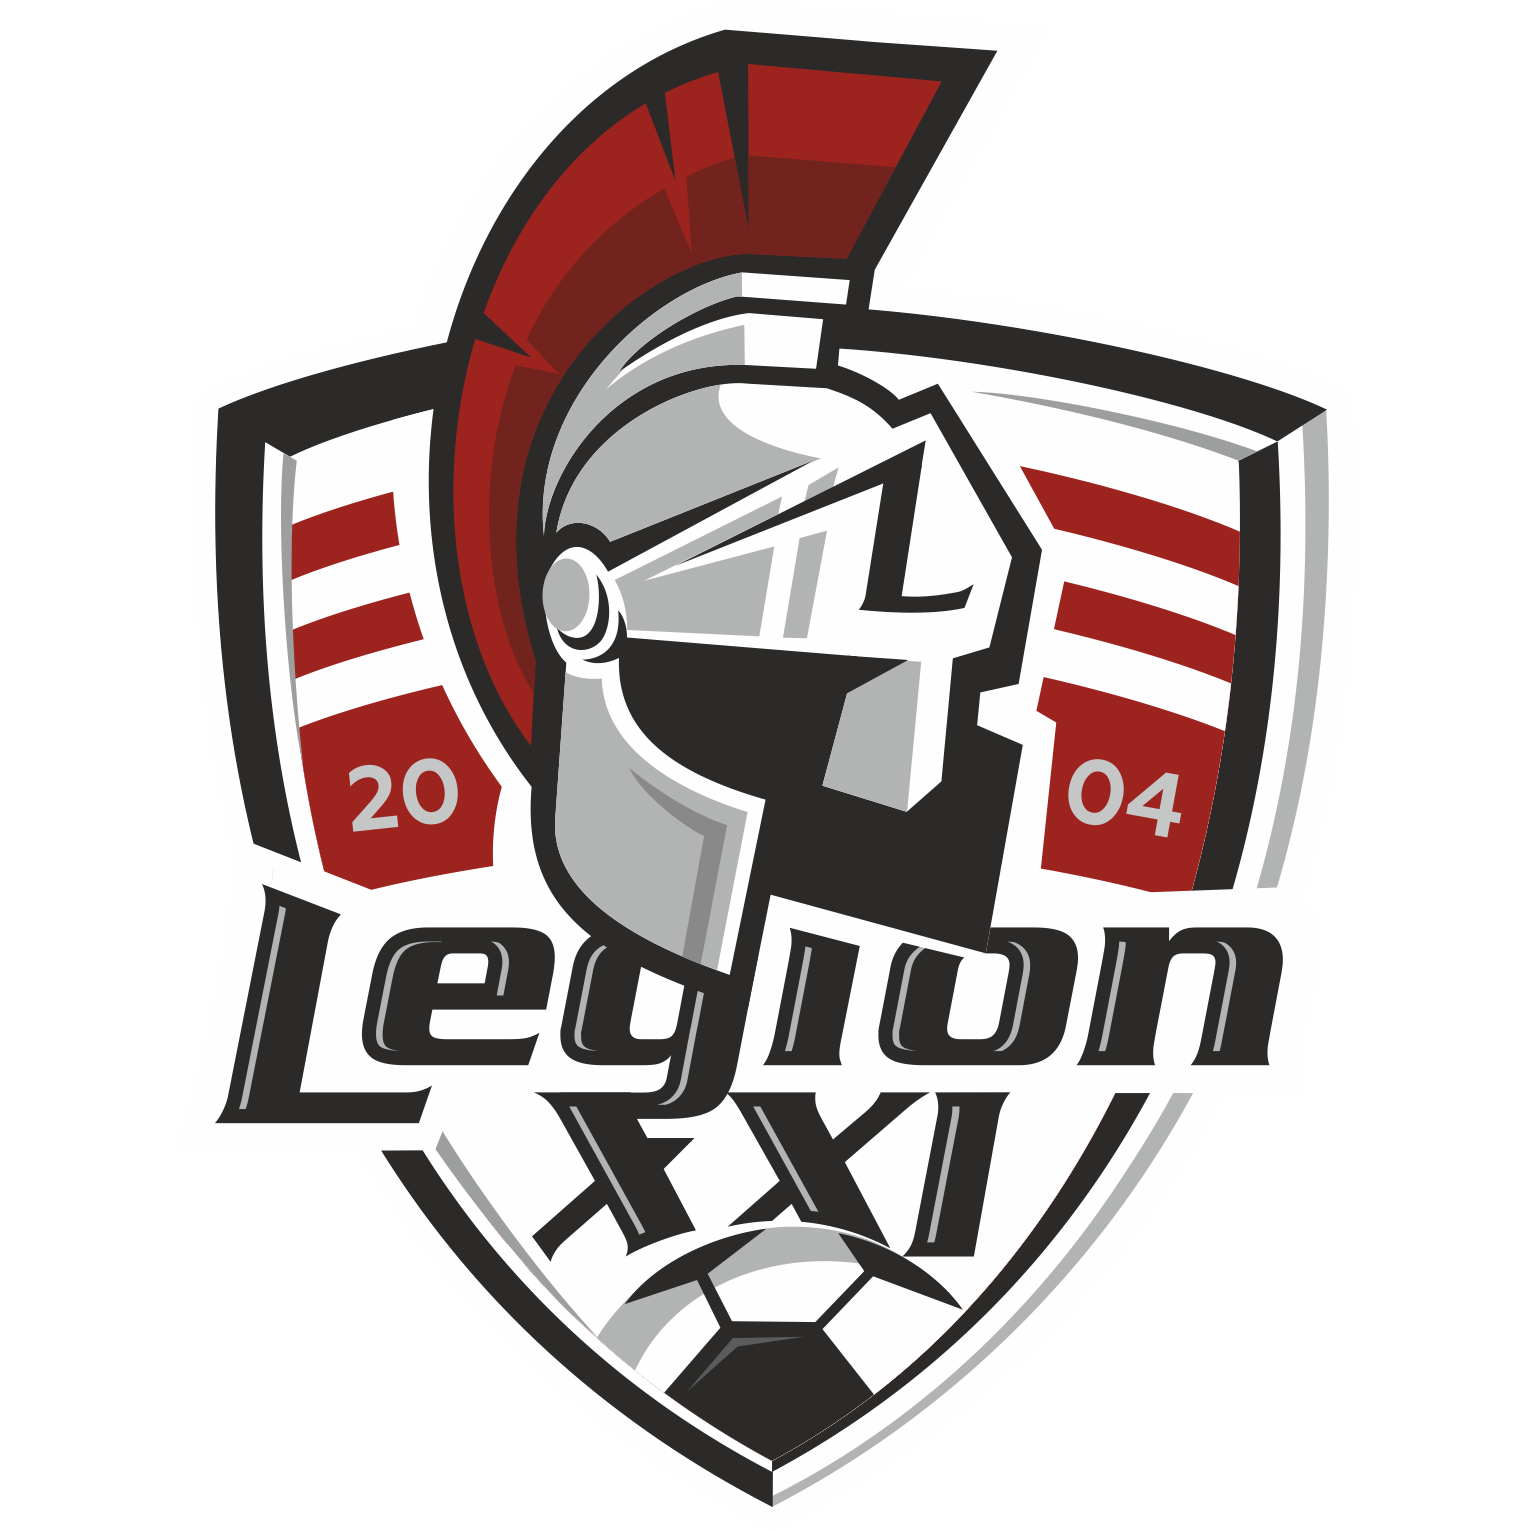 Legion XXI (Киев, Украина)